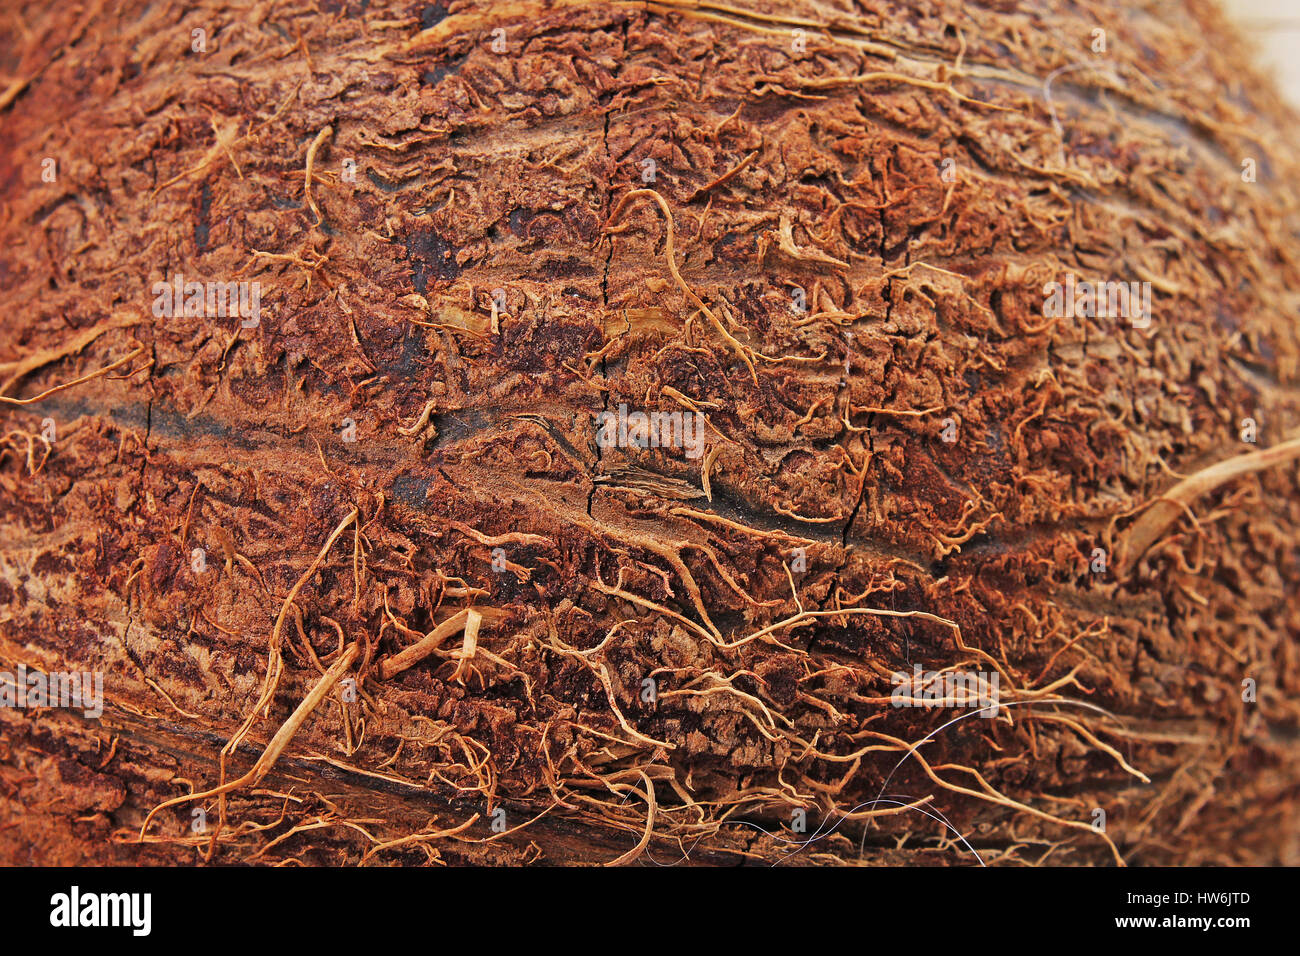 Coconut hair fibers. Stock Photo